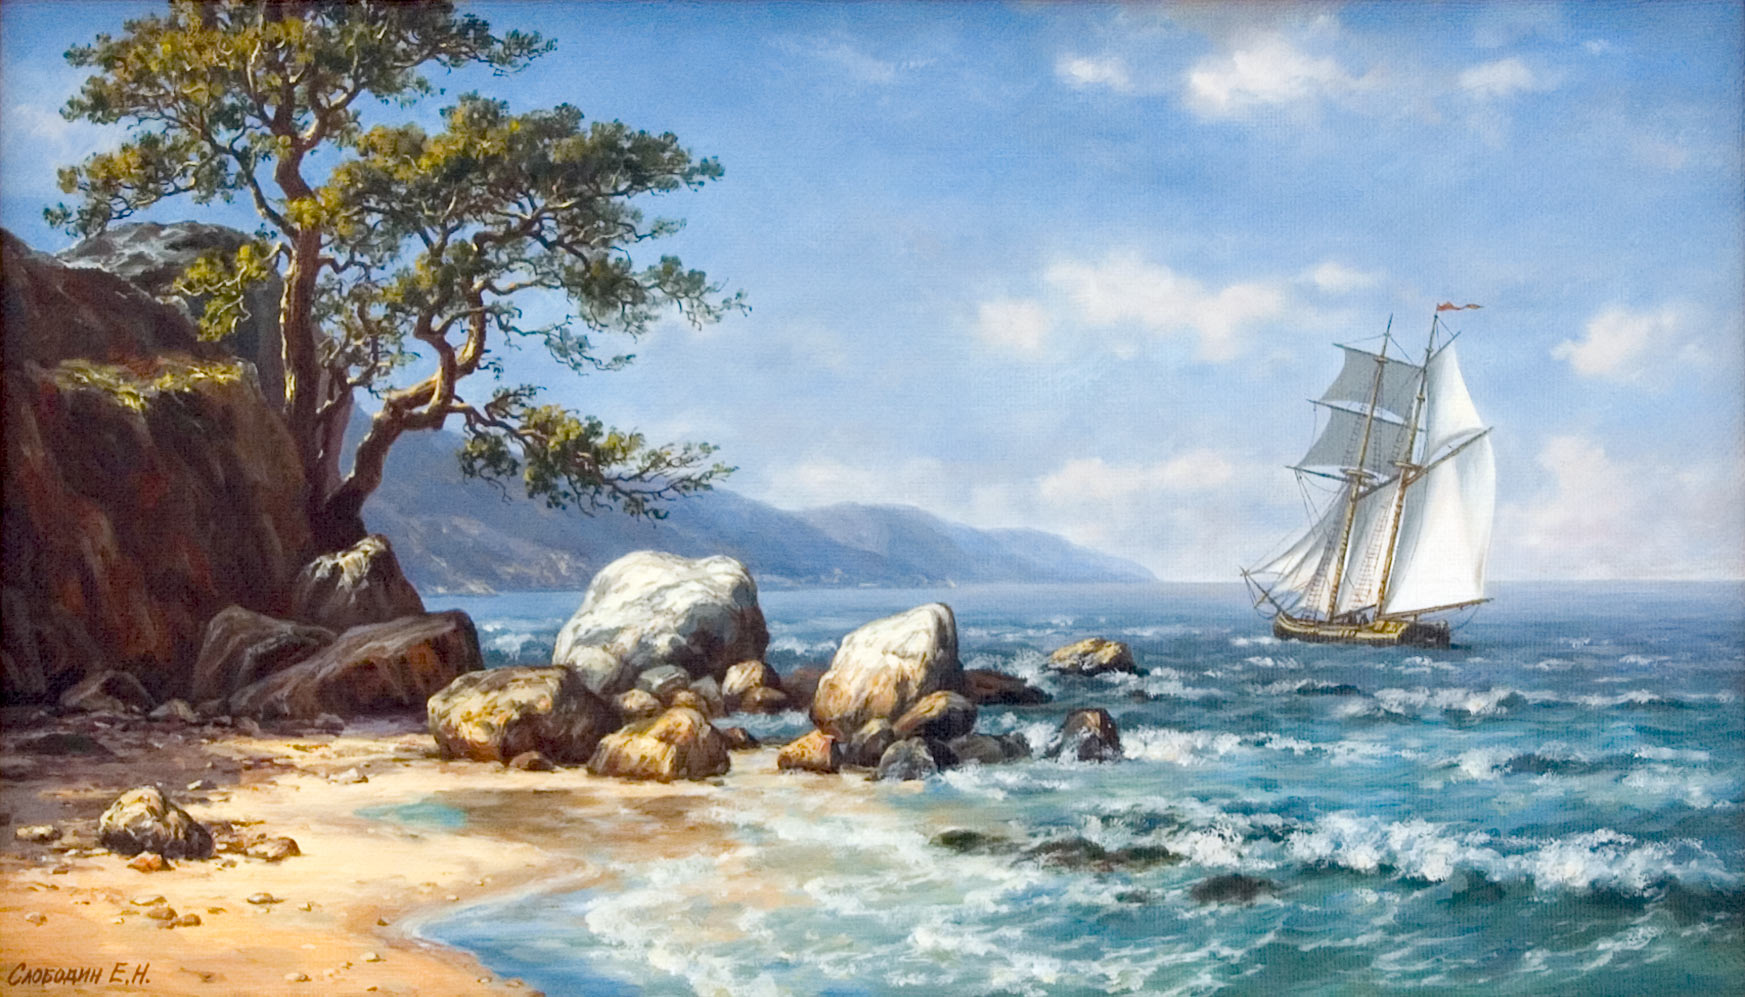 Парусник у берега моря — картина маслом на холсте